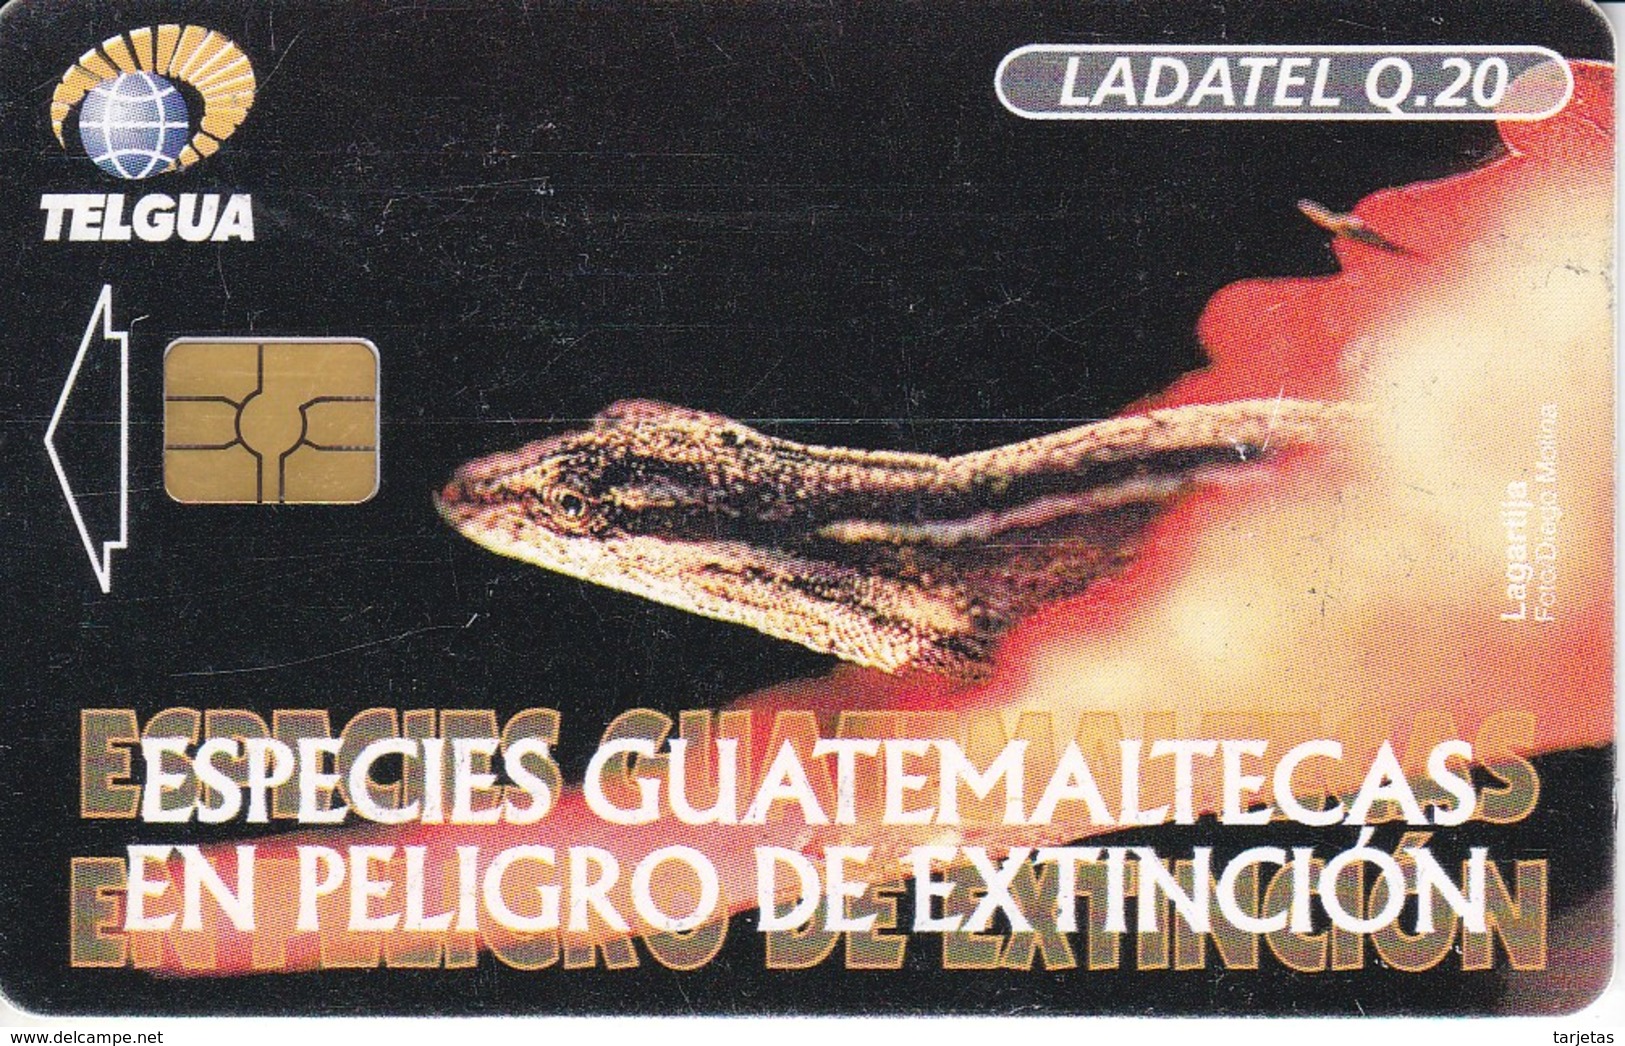 TARJETA DE GUATEMALA DE UNA LAGARTIJA (LADATEL) - Guatemala